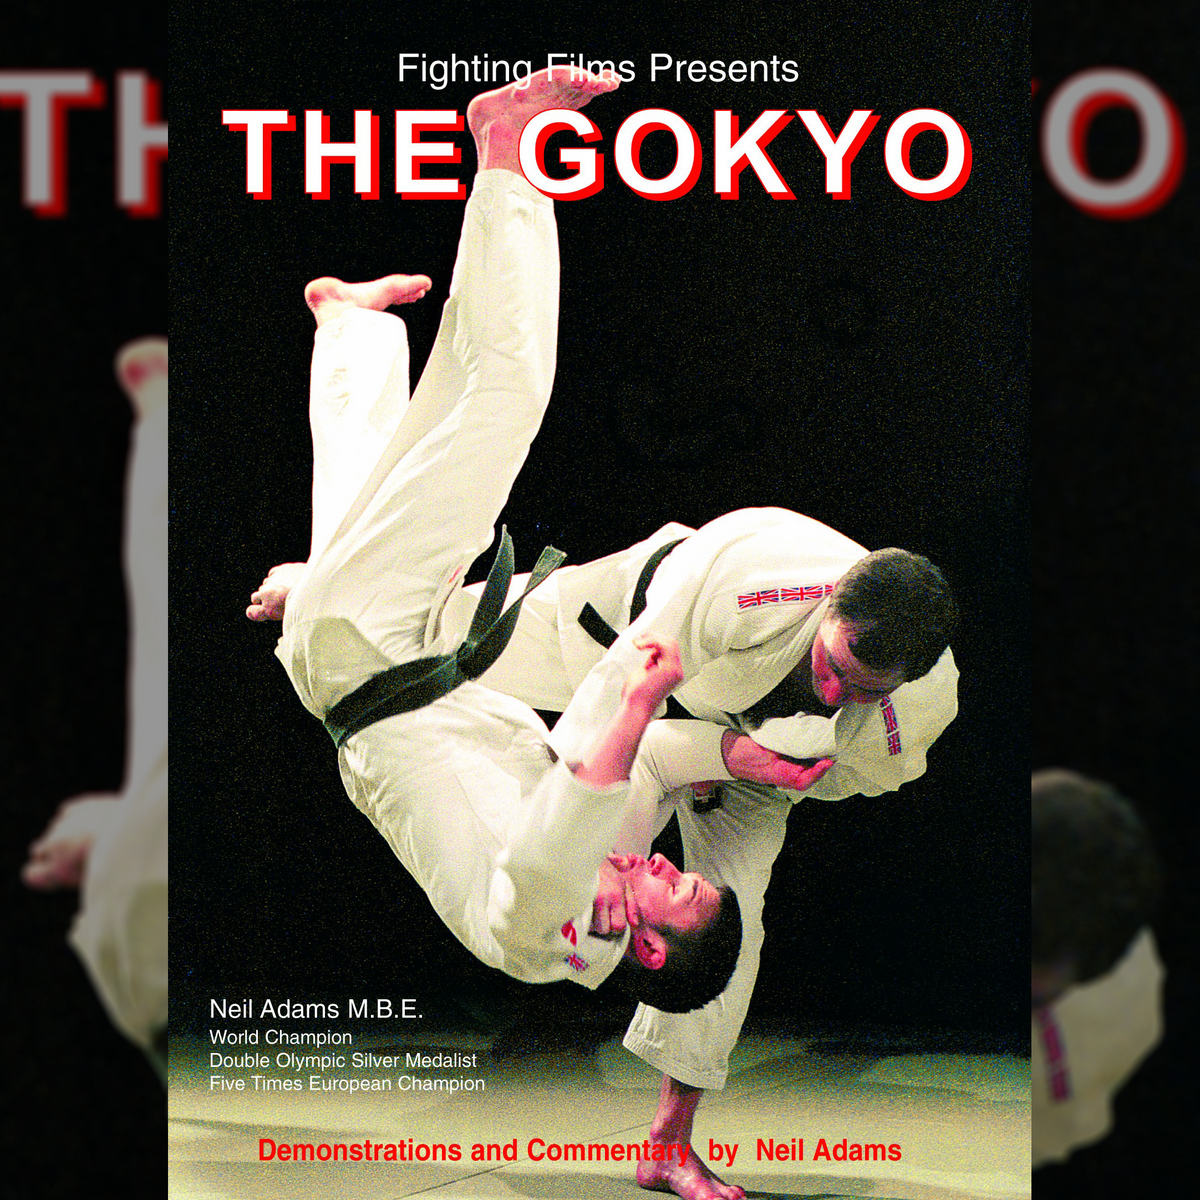 The Gokyo